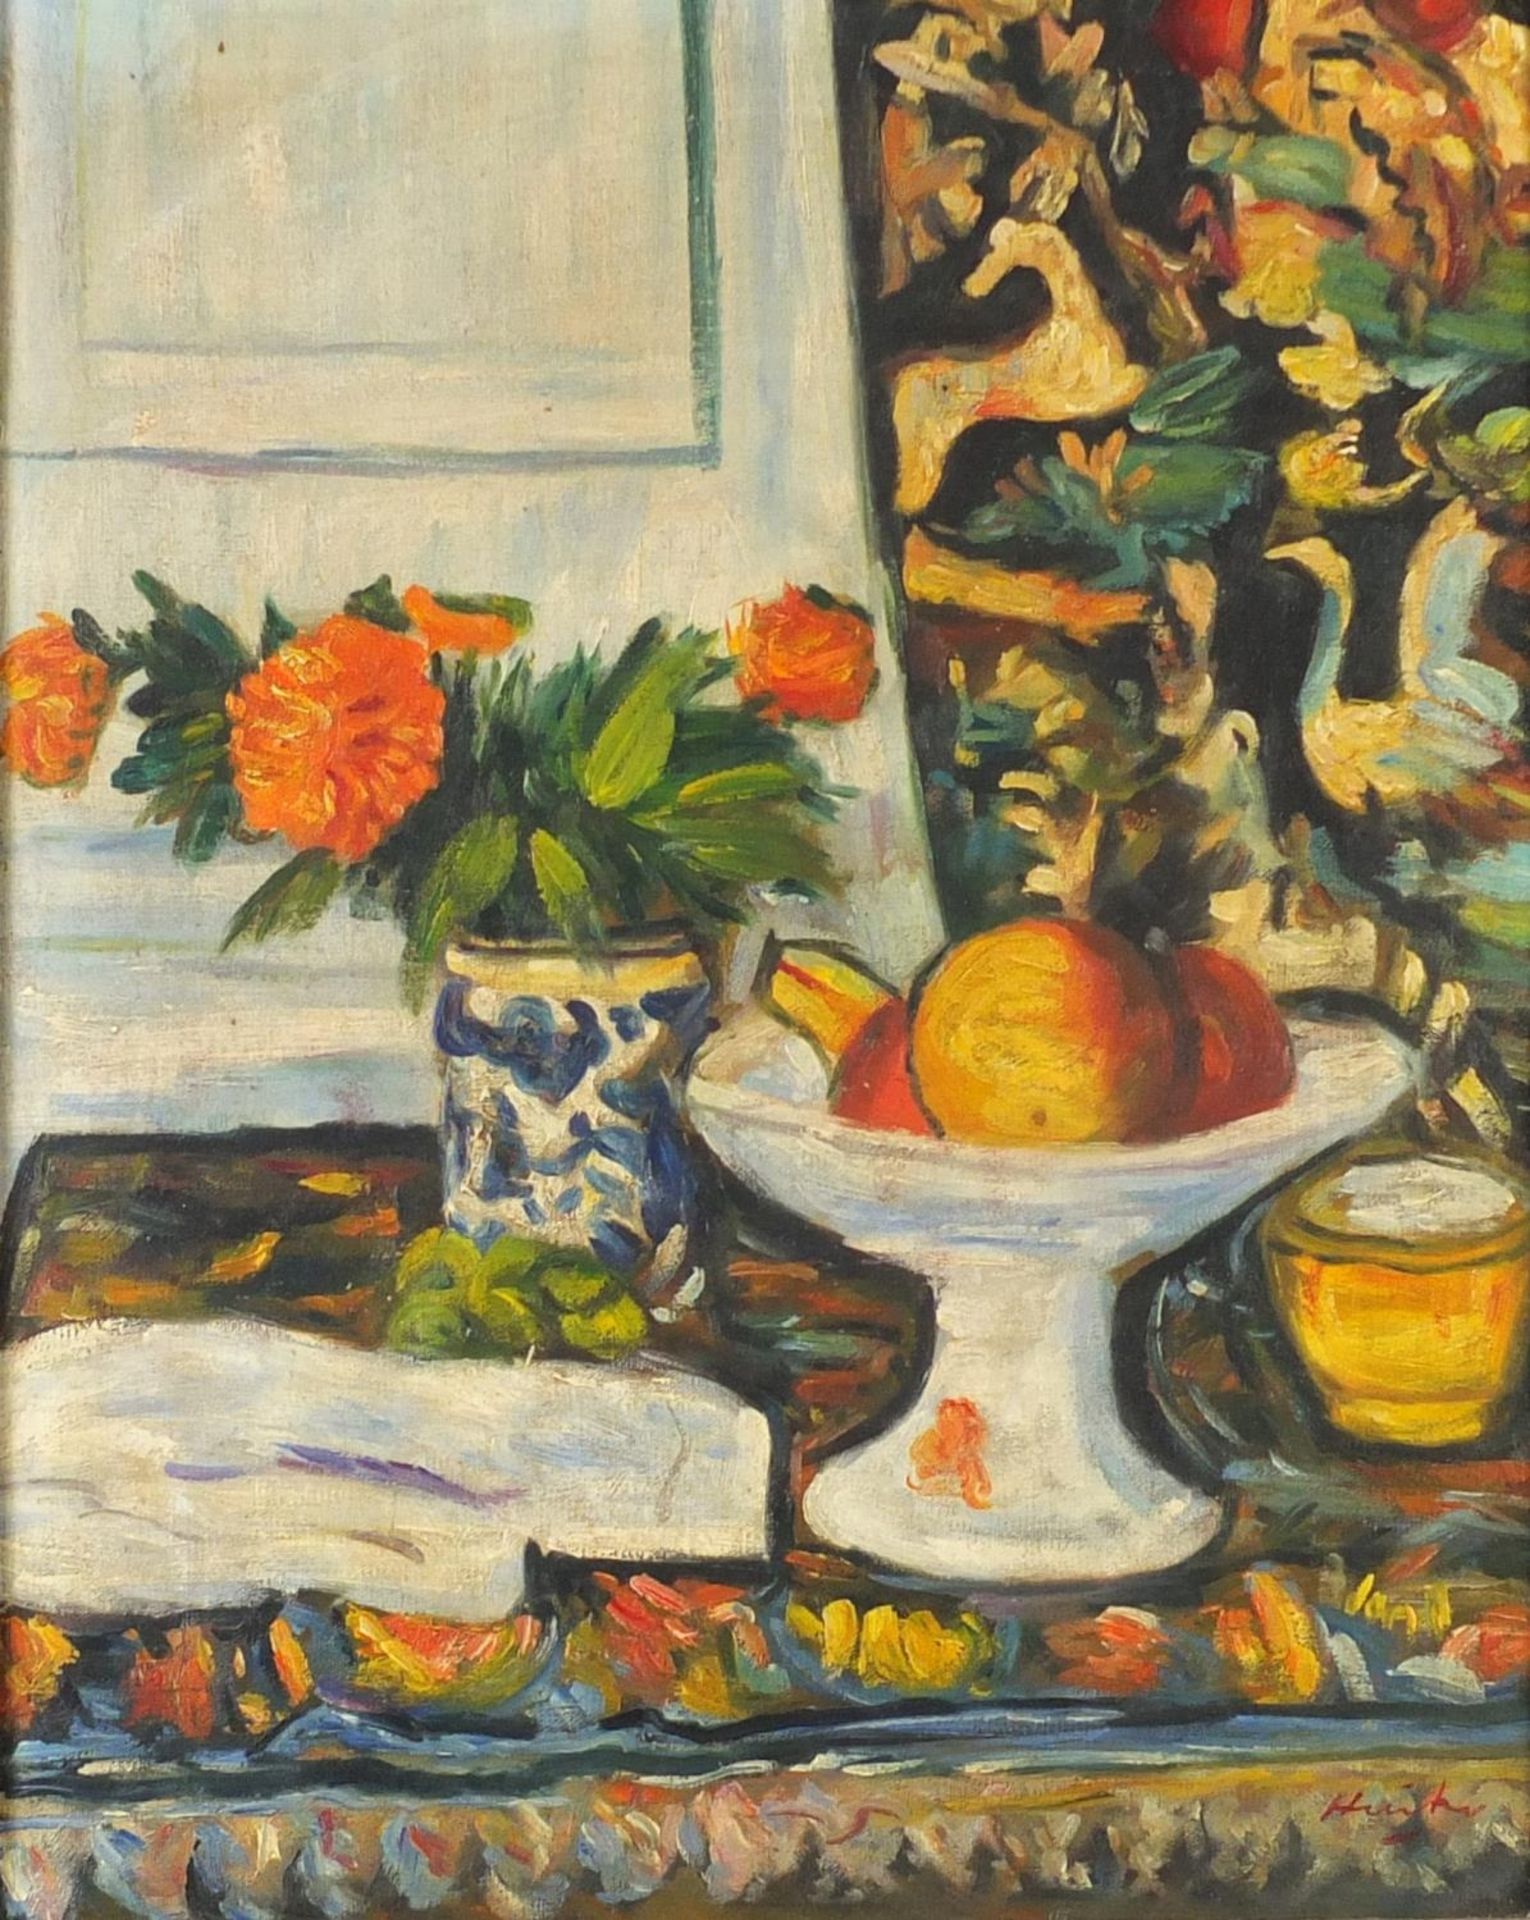 Manner of George Leslie Hunter - Still life fruit, flowers and vessels, Scottish Colourist school